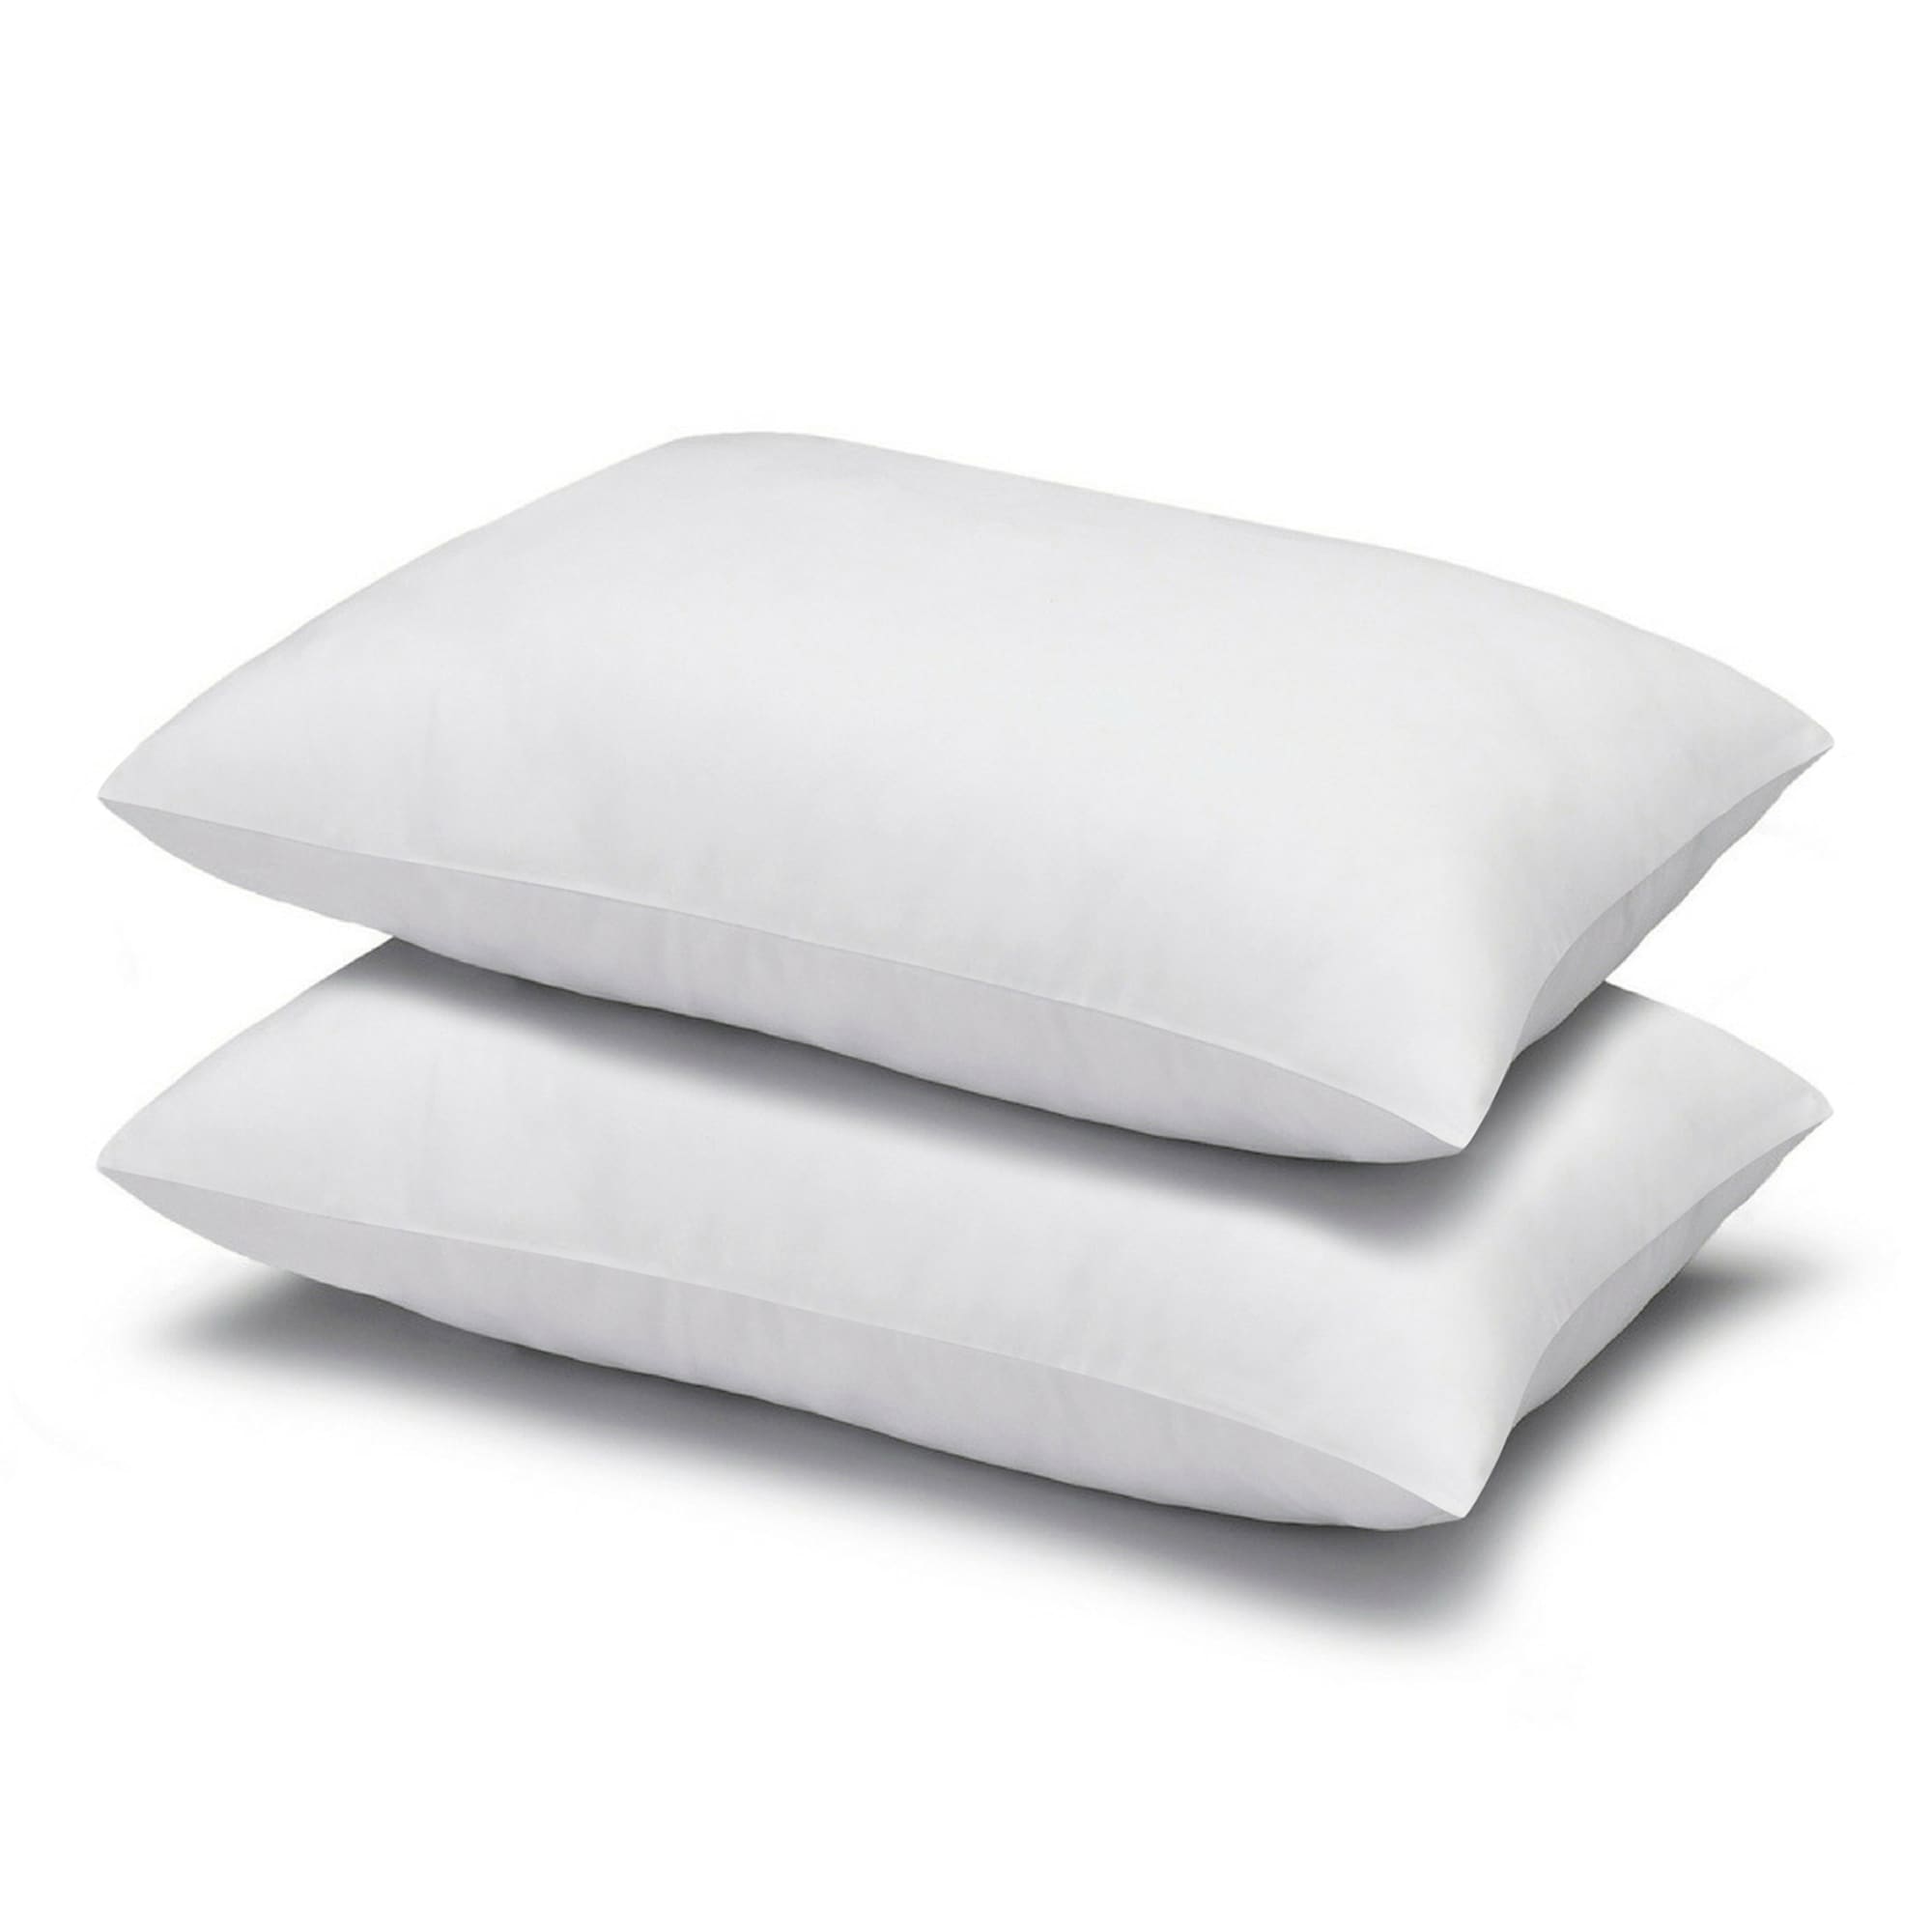 Superior Comfort Medium Density Down Alternative Pillow - Two Pack